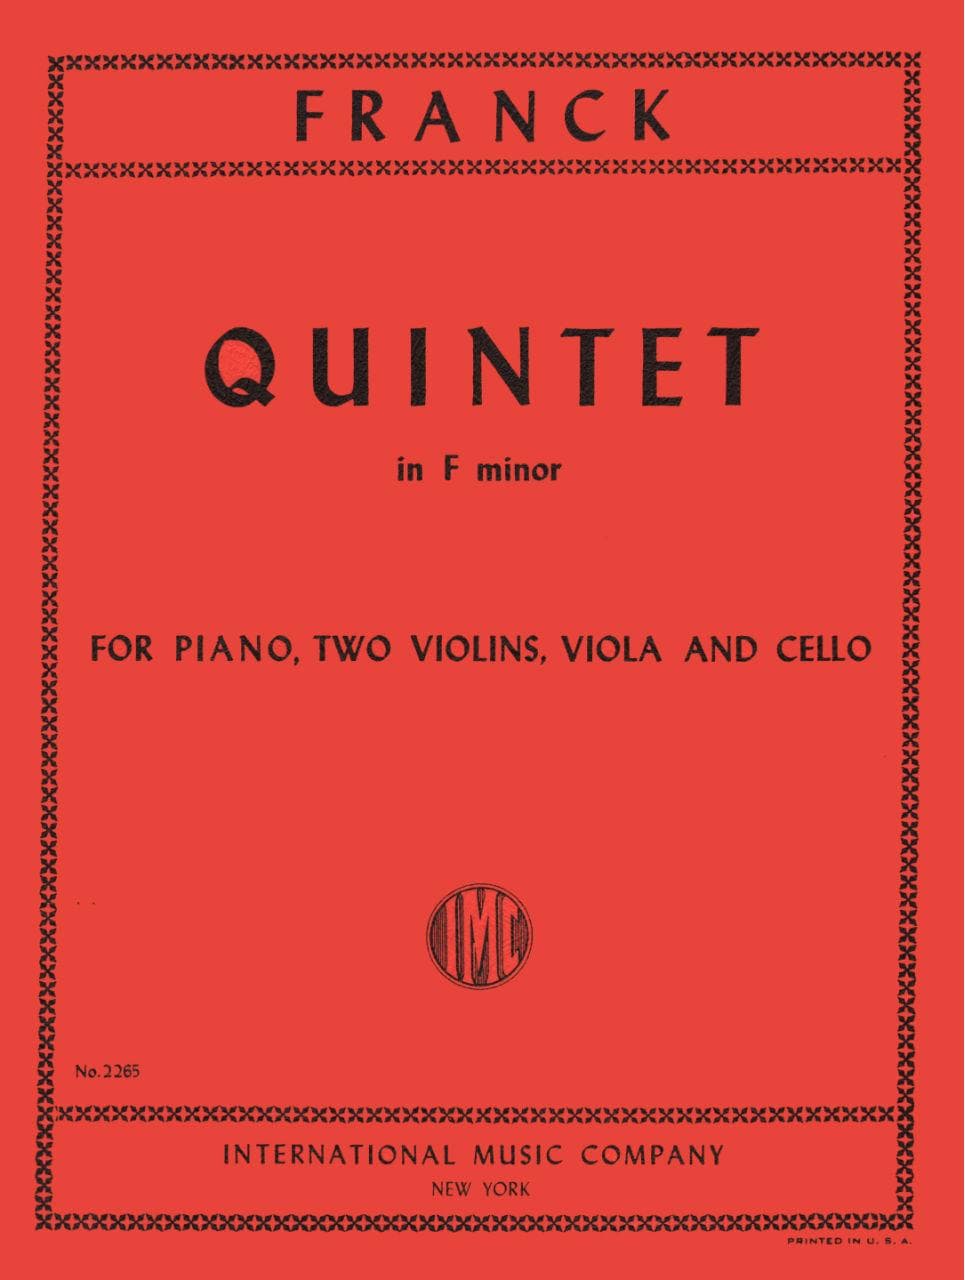 Franck, César - Piano Quintet in f minor - Two Violins, Viola, Cello, and Piano - International Edition